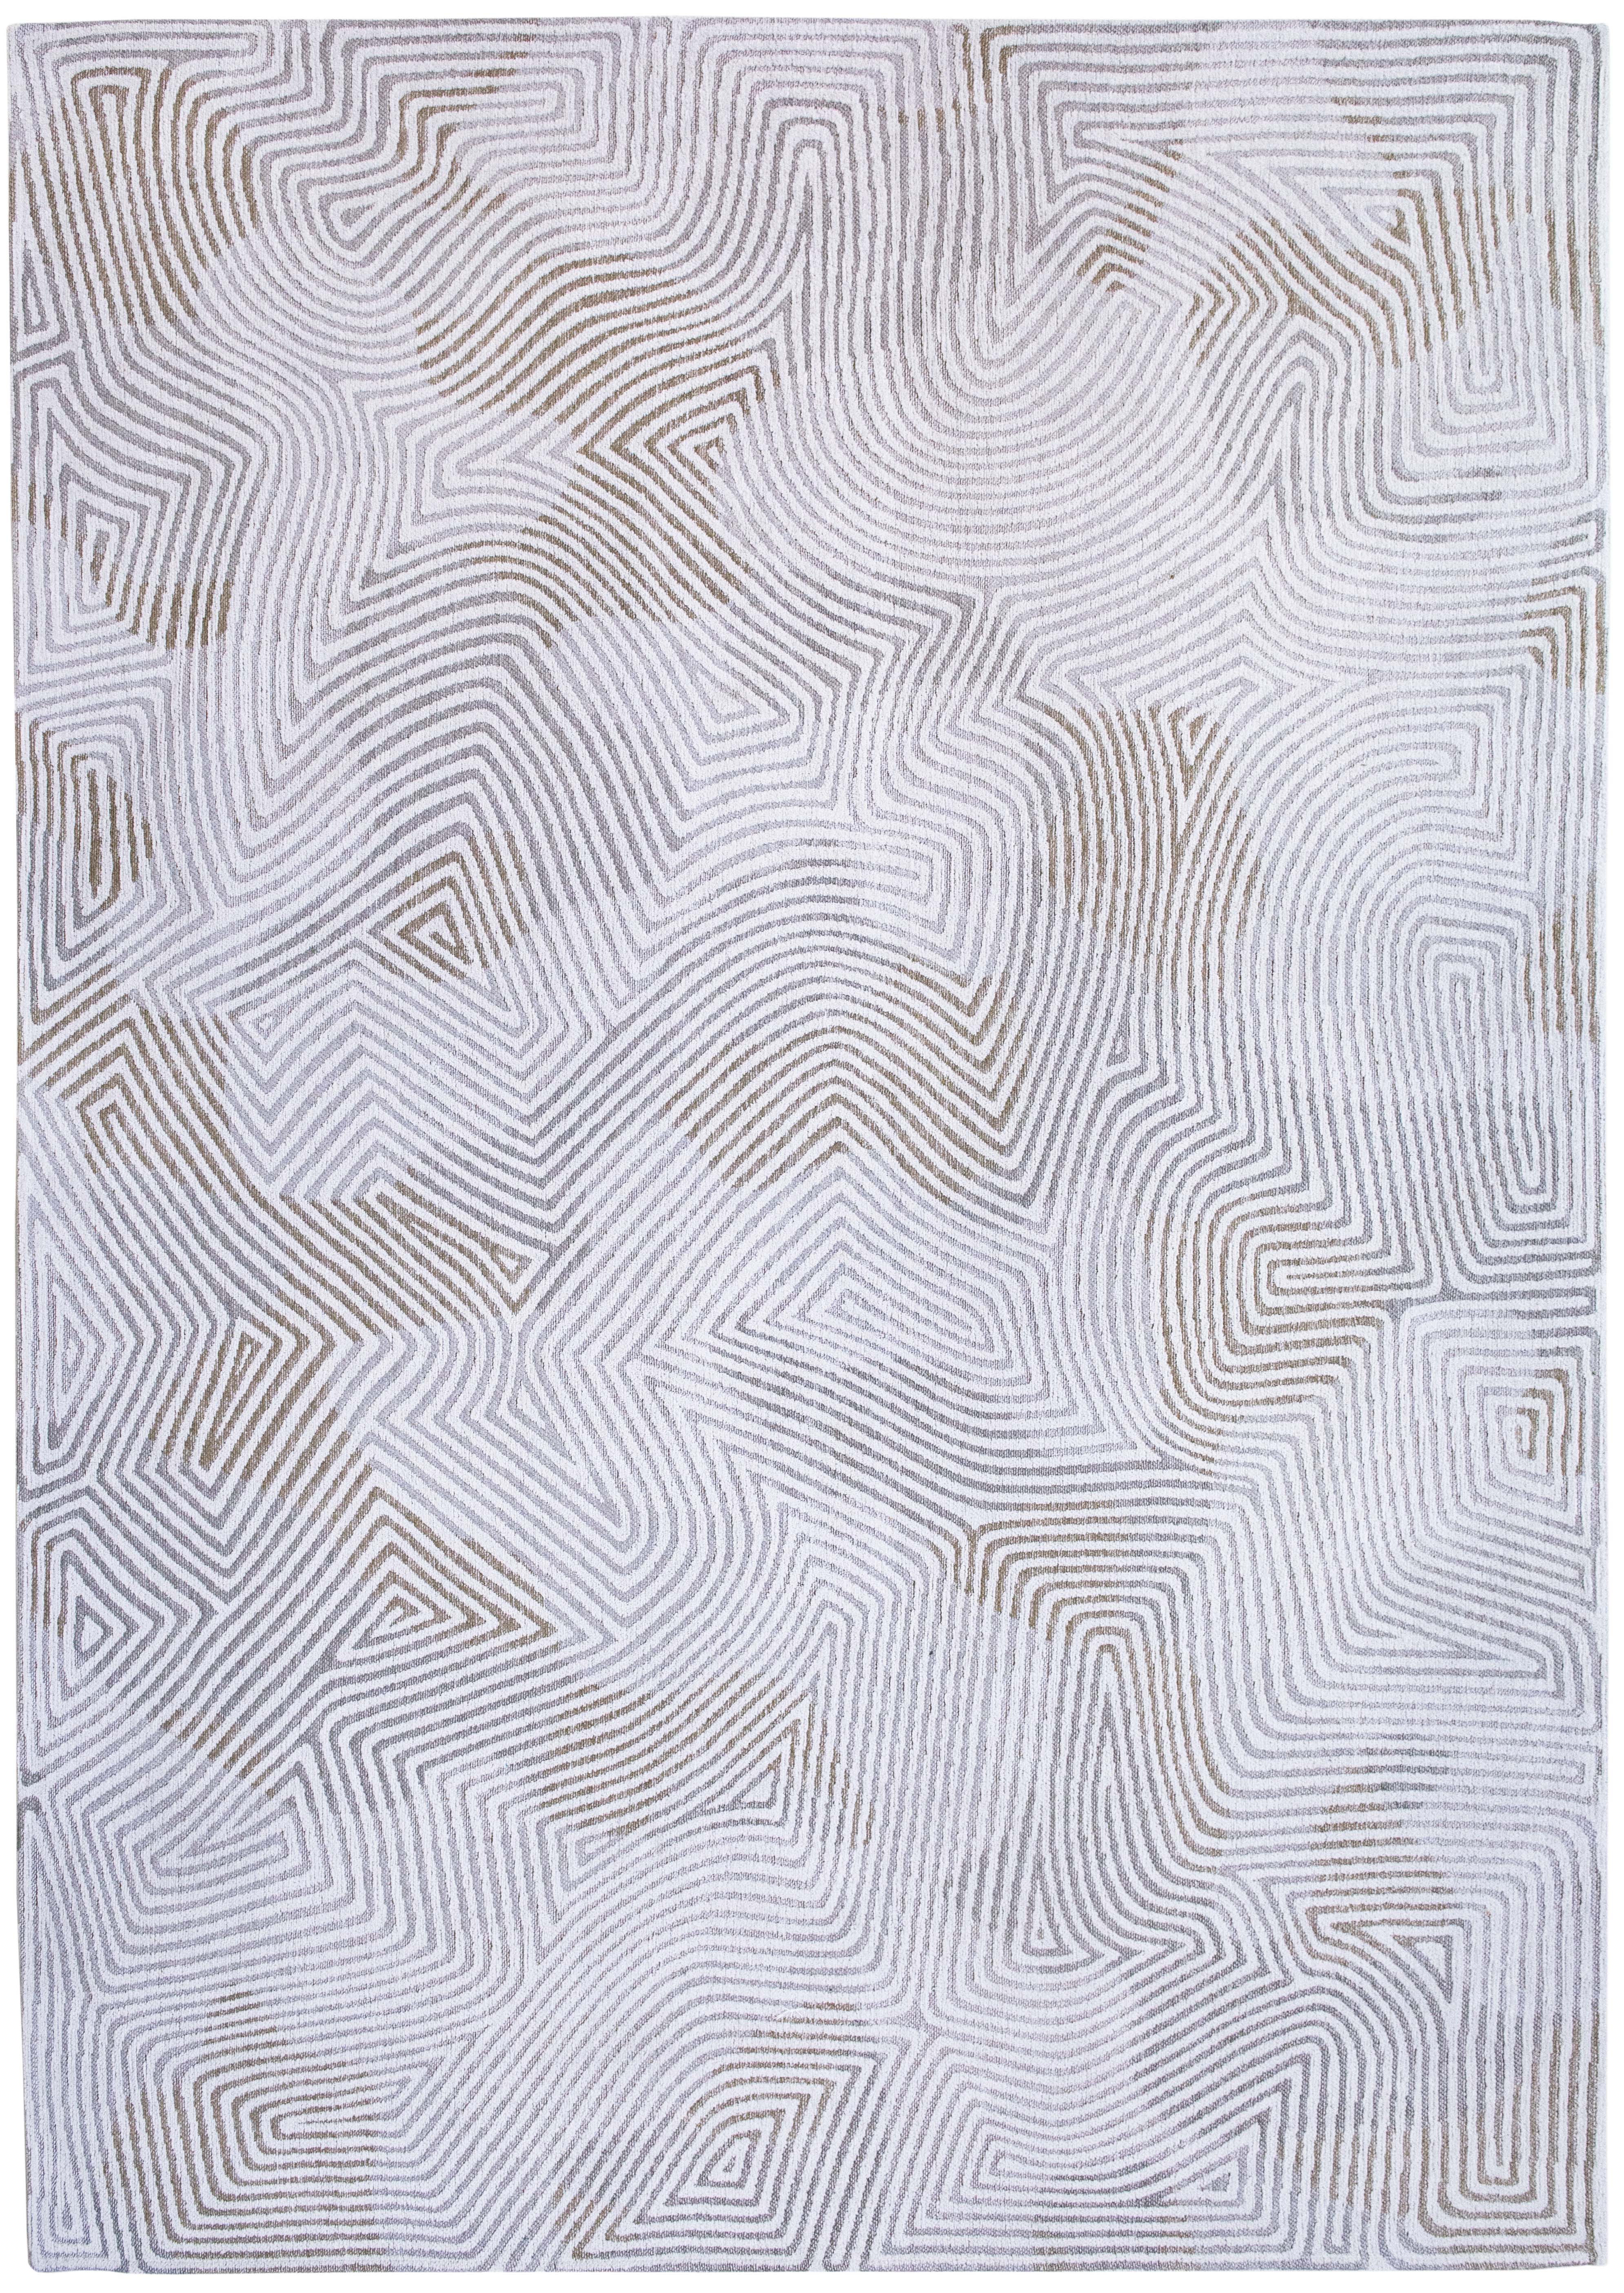 Cream flatweave runner area rug with organic, textured pattern